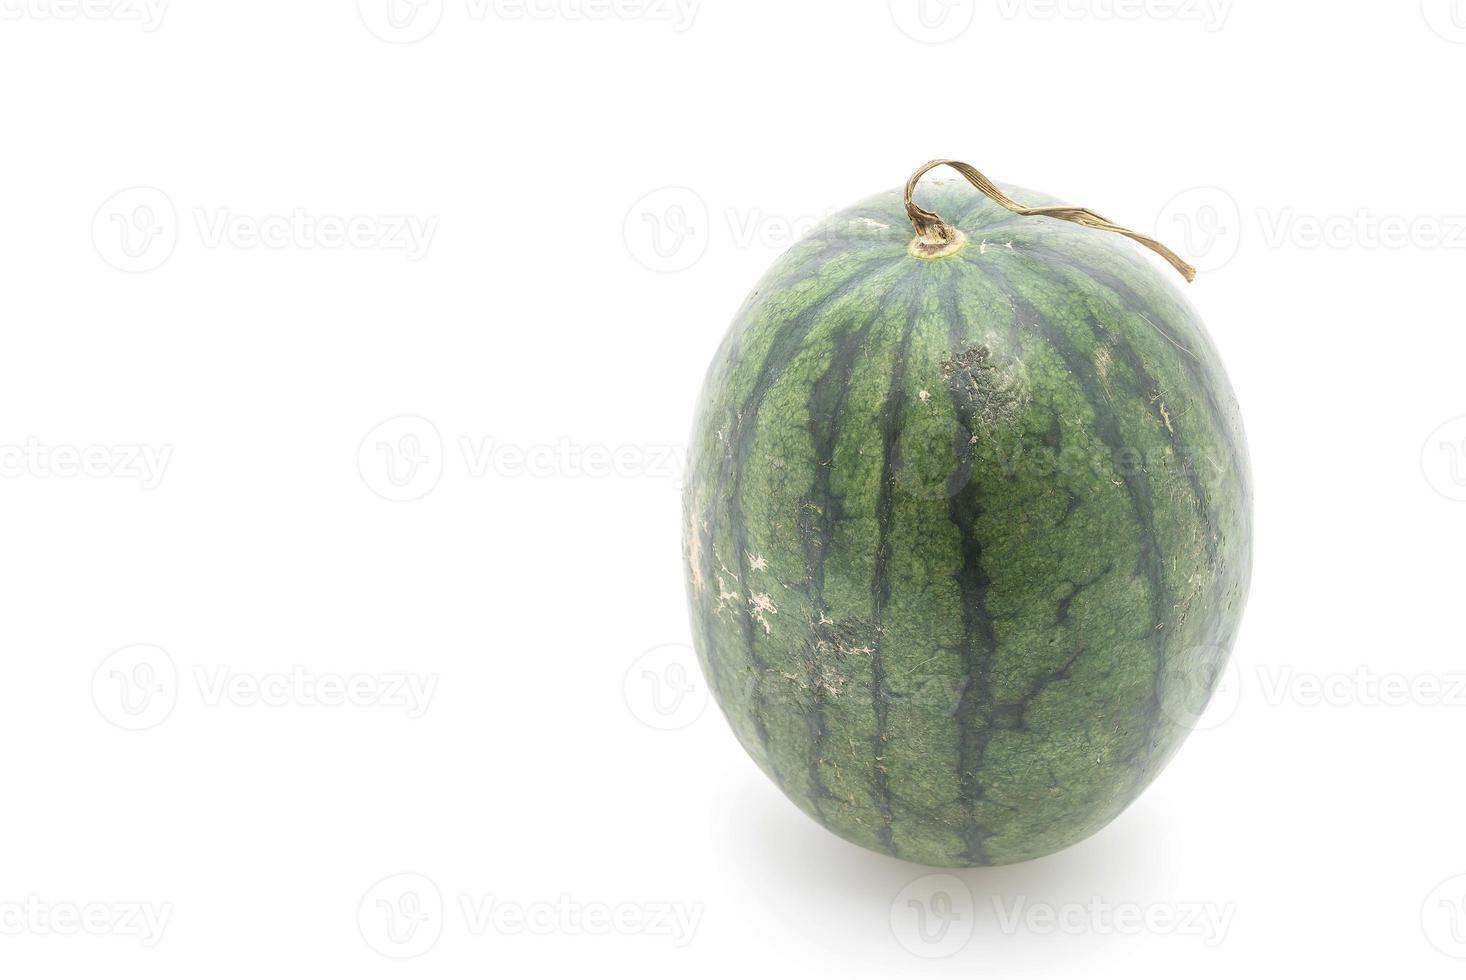 verse watermeloen op witte achtergrond foto